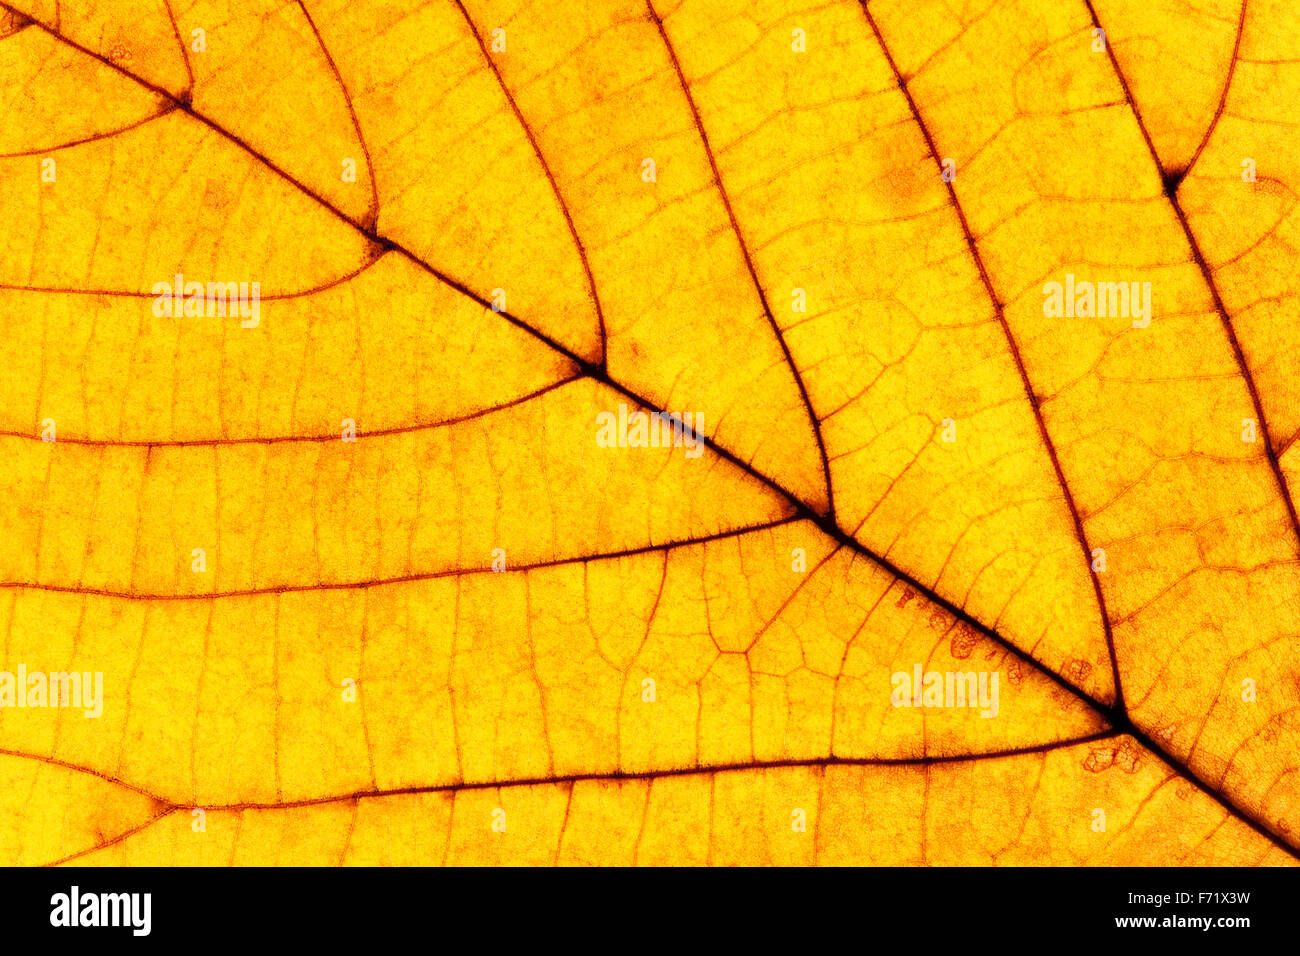 Extreme Closeup of a Yellow Autumn Leaf Stock Photo